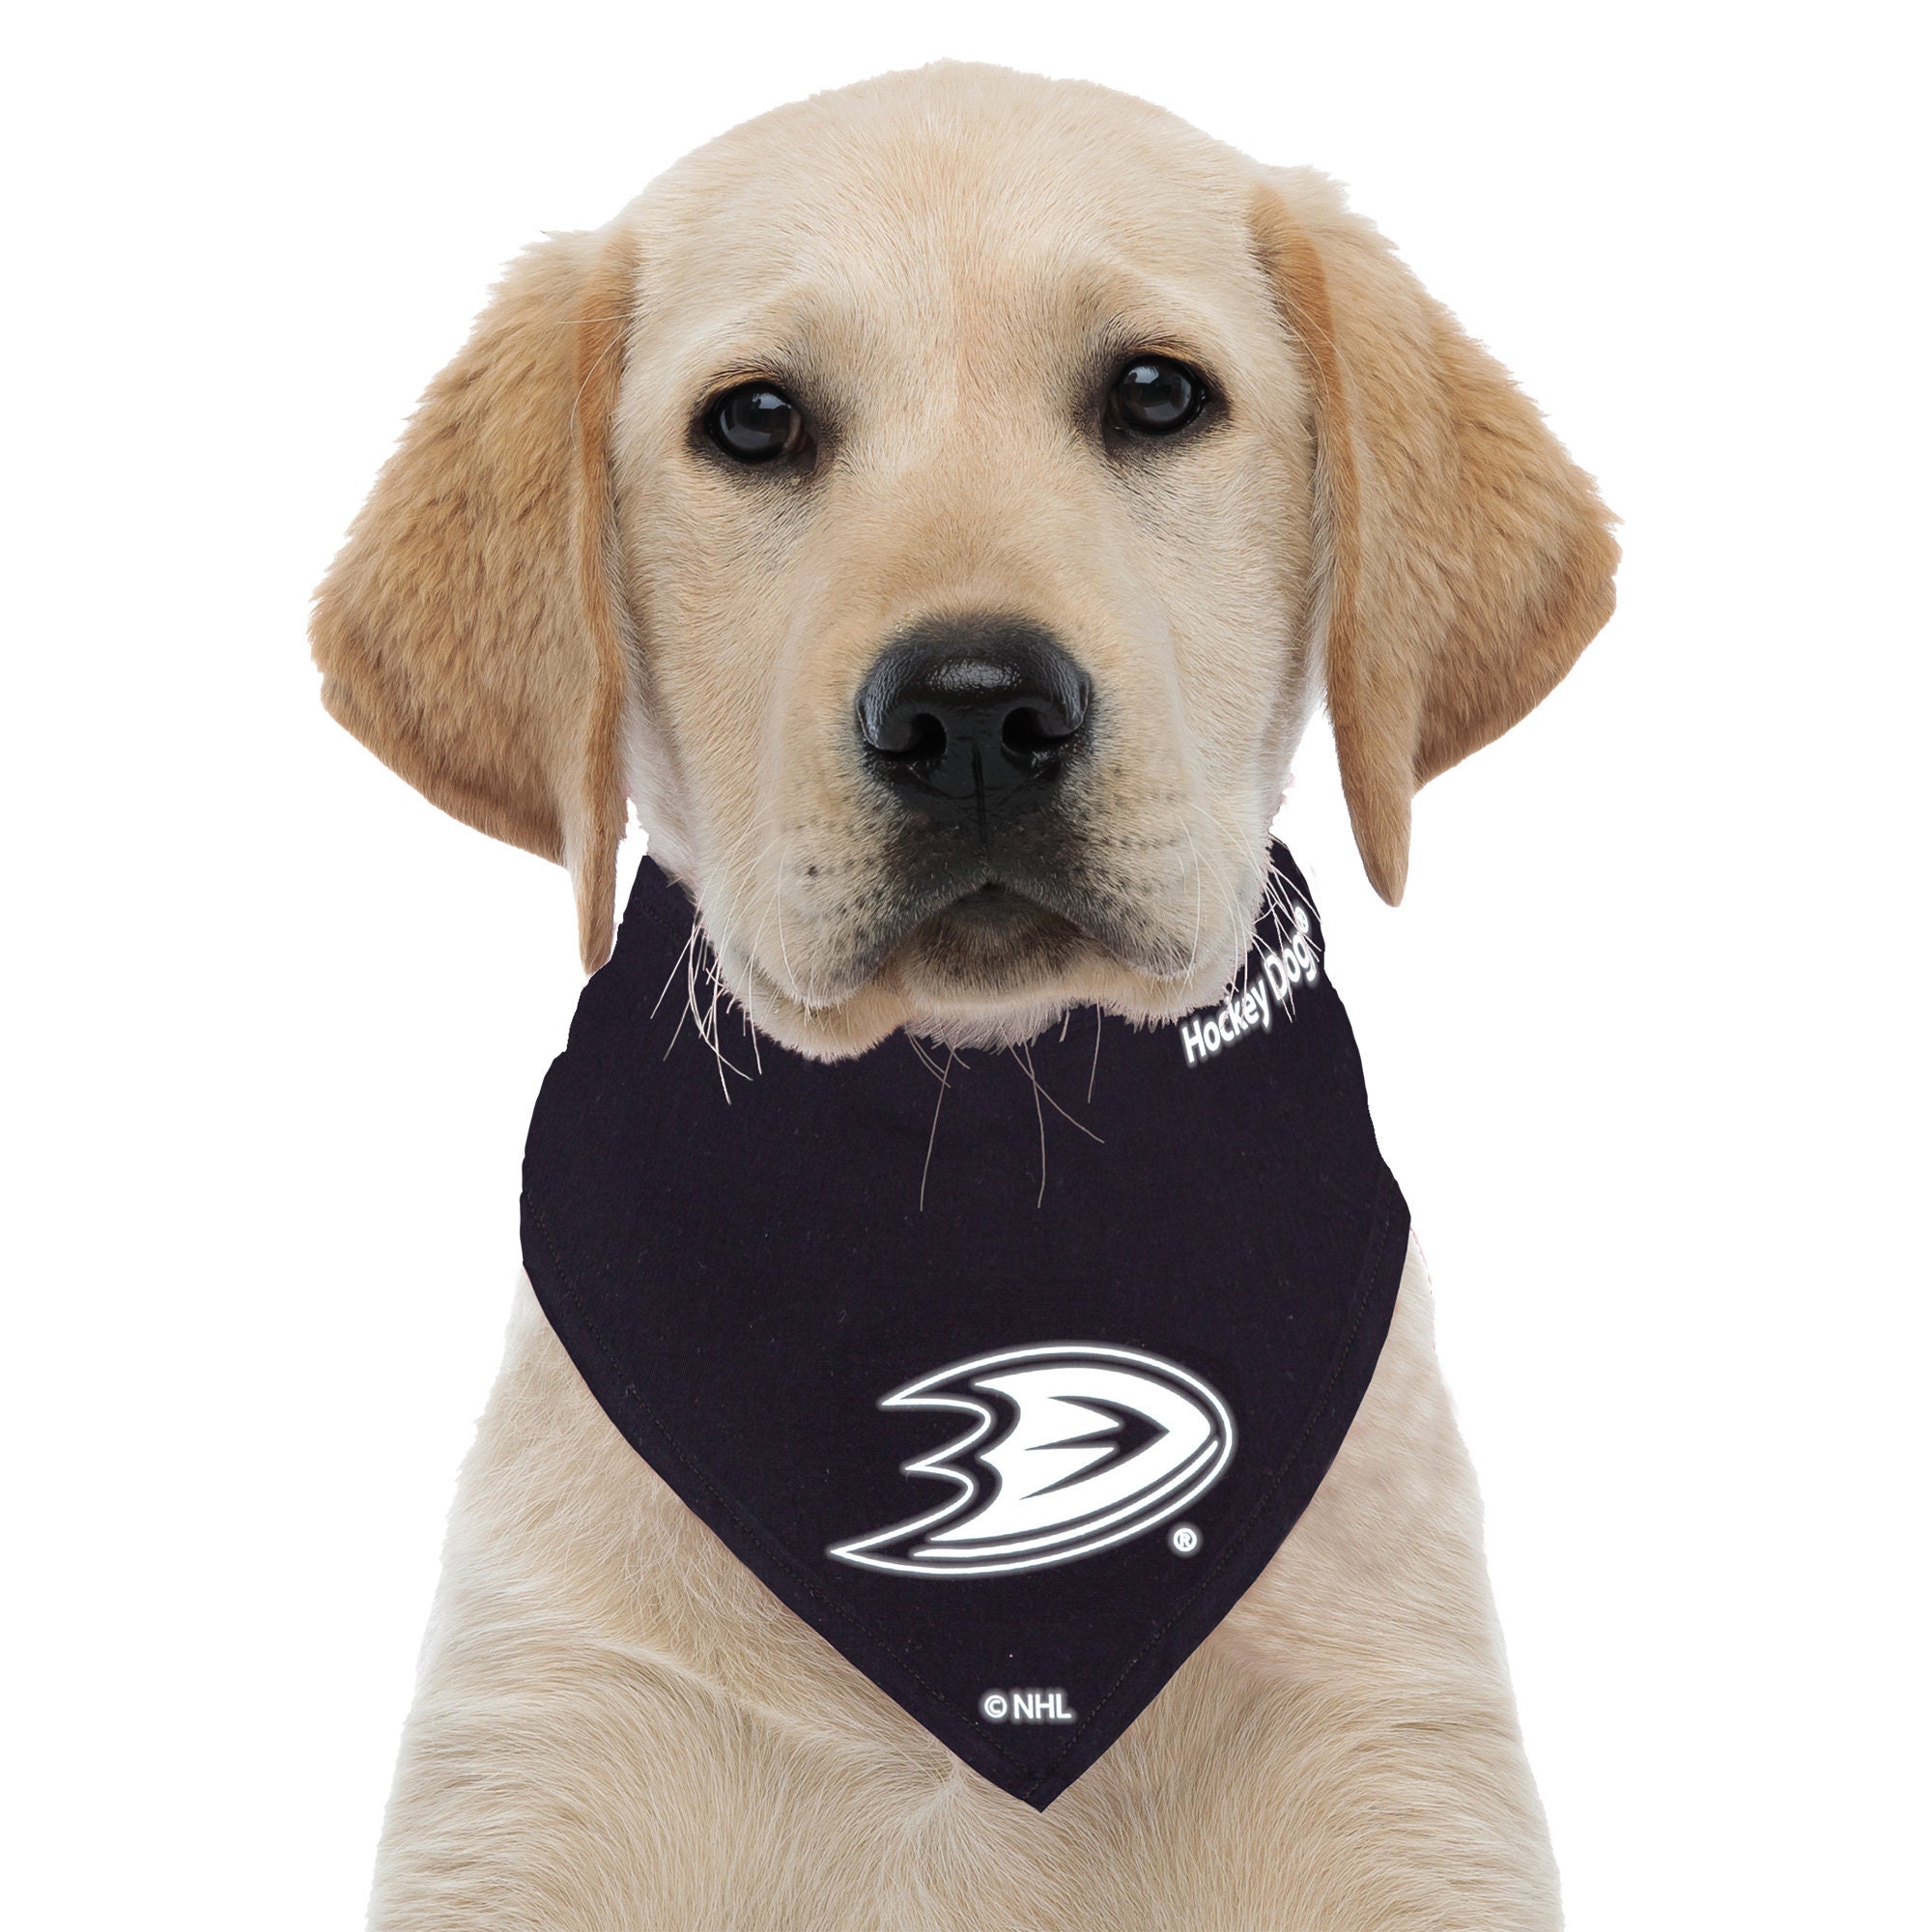 Anaheim Ducks sports pet supplies for dogs